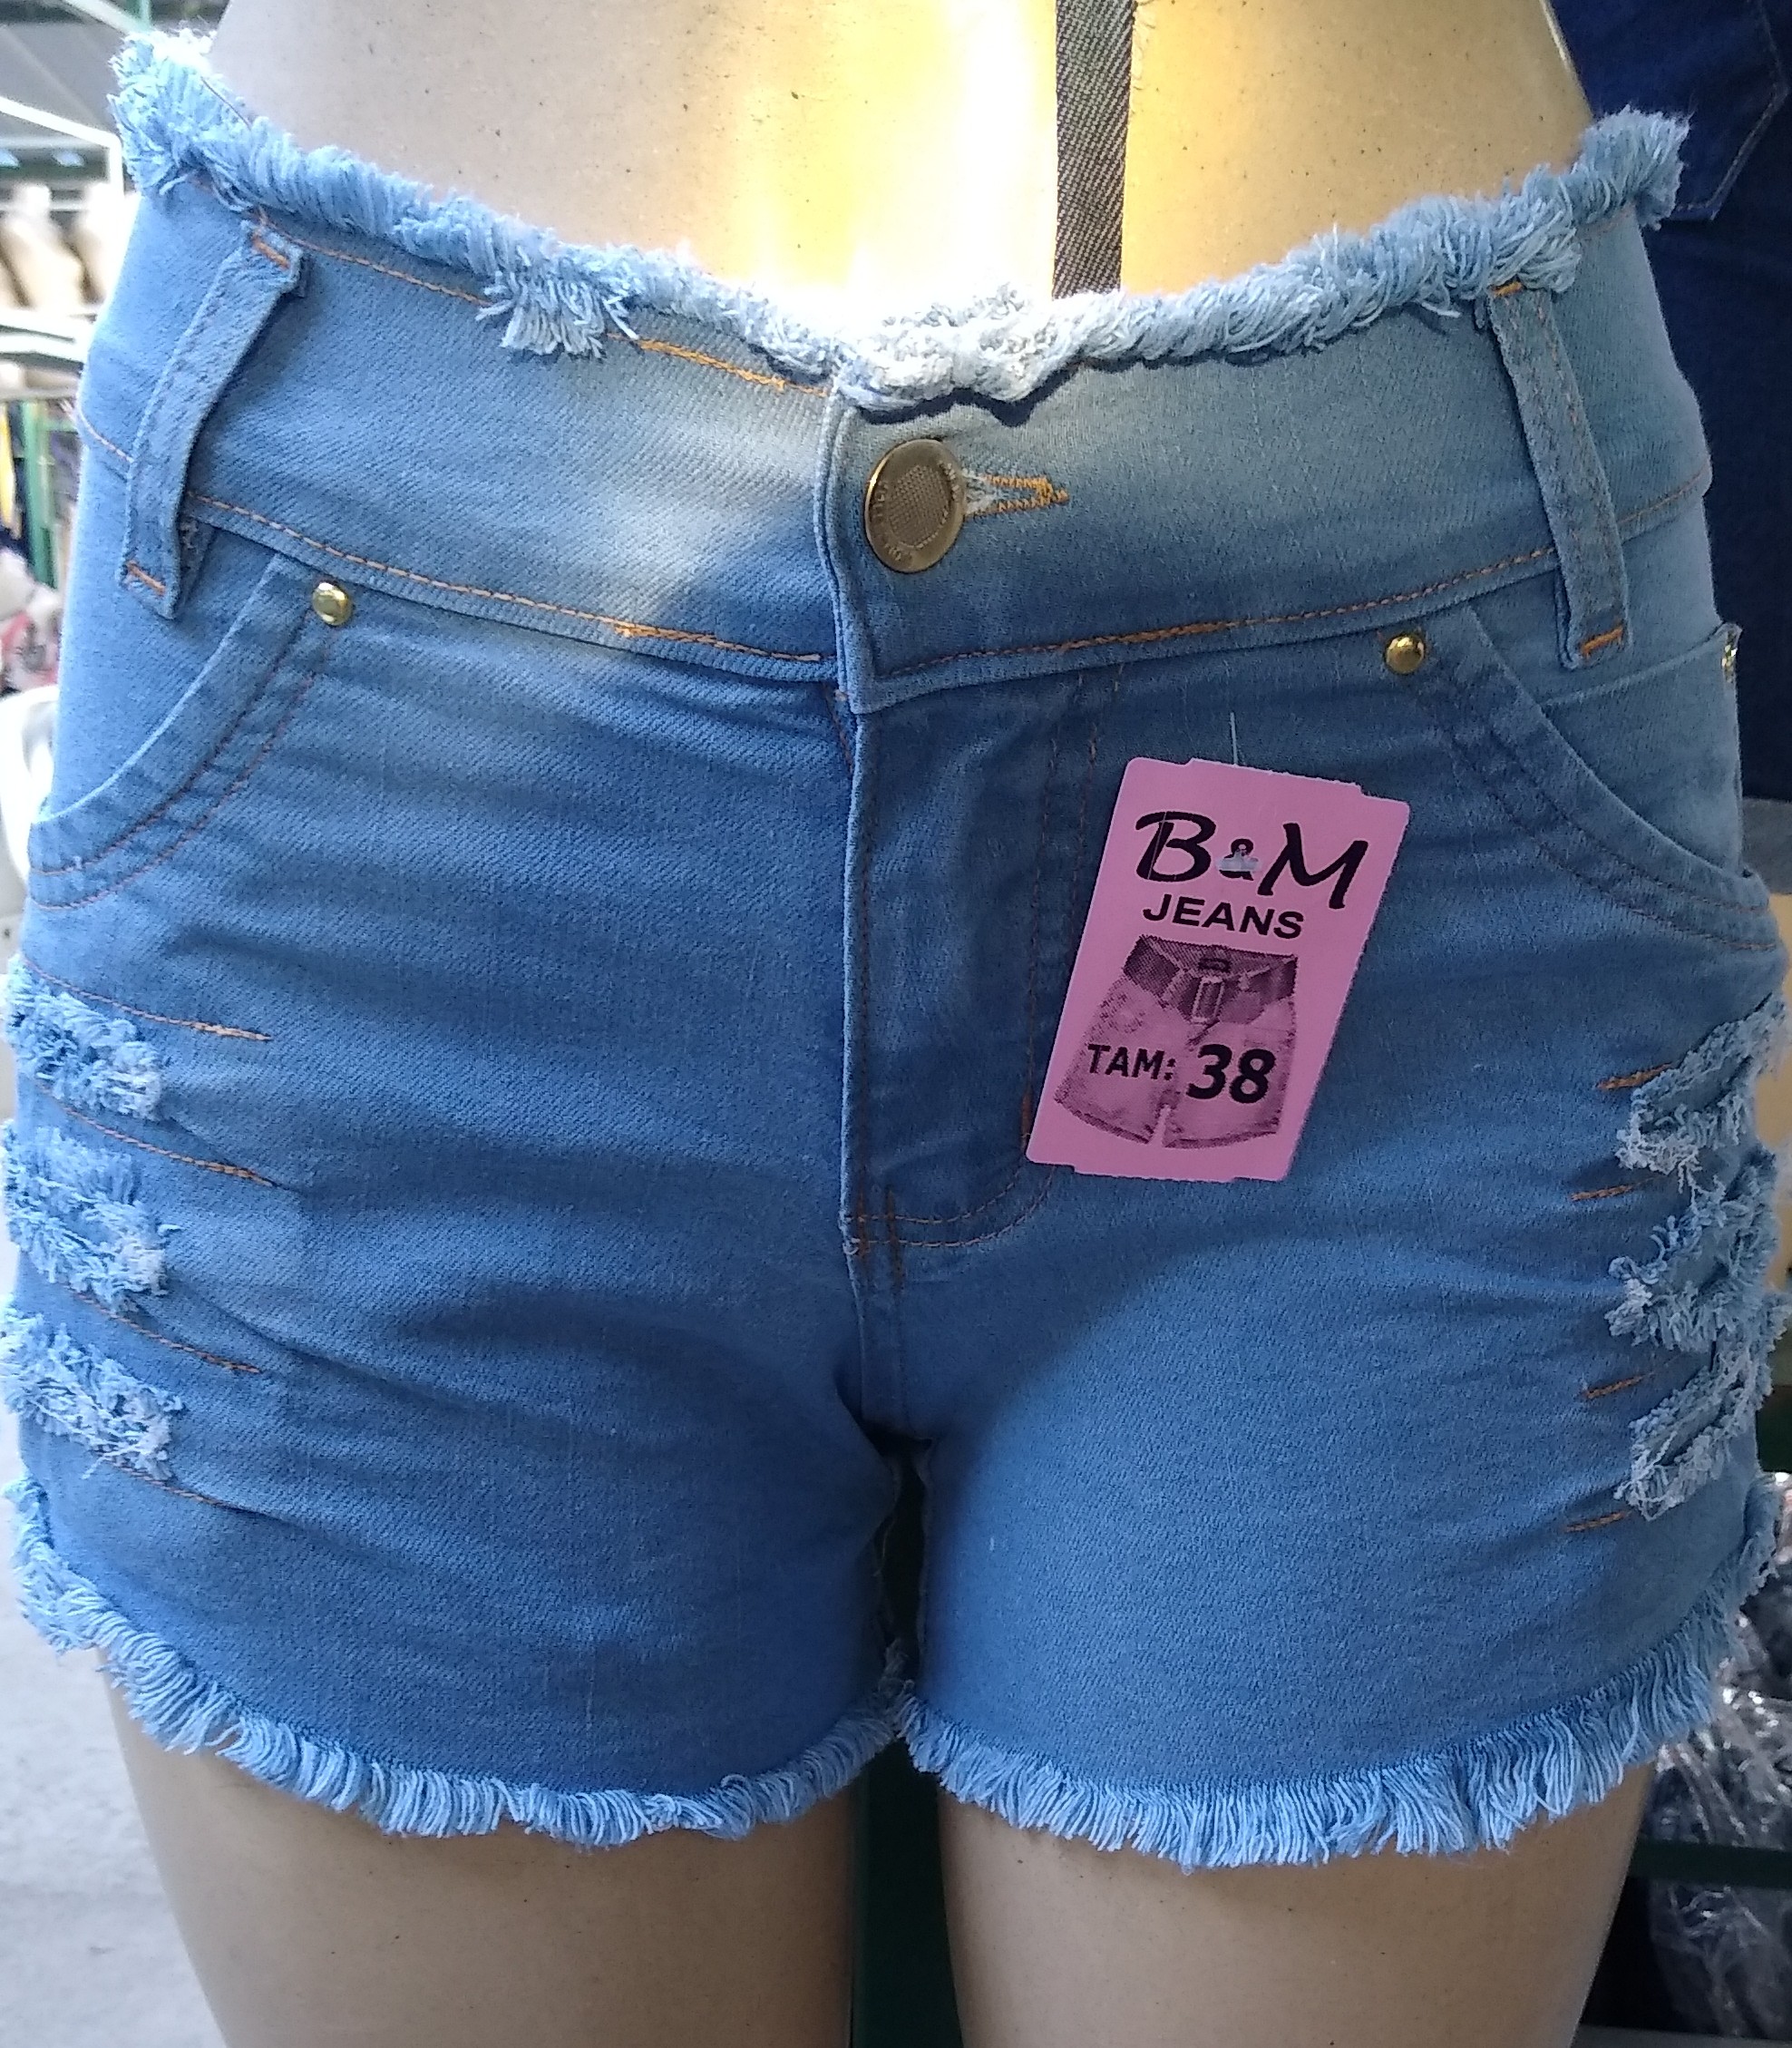 B&M jeans